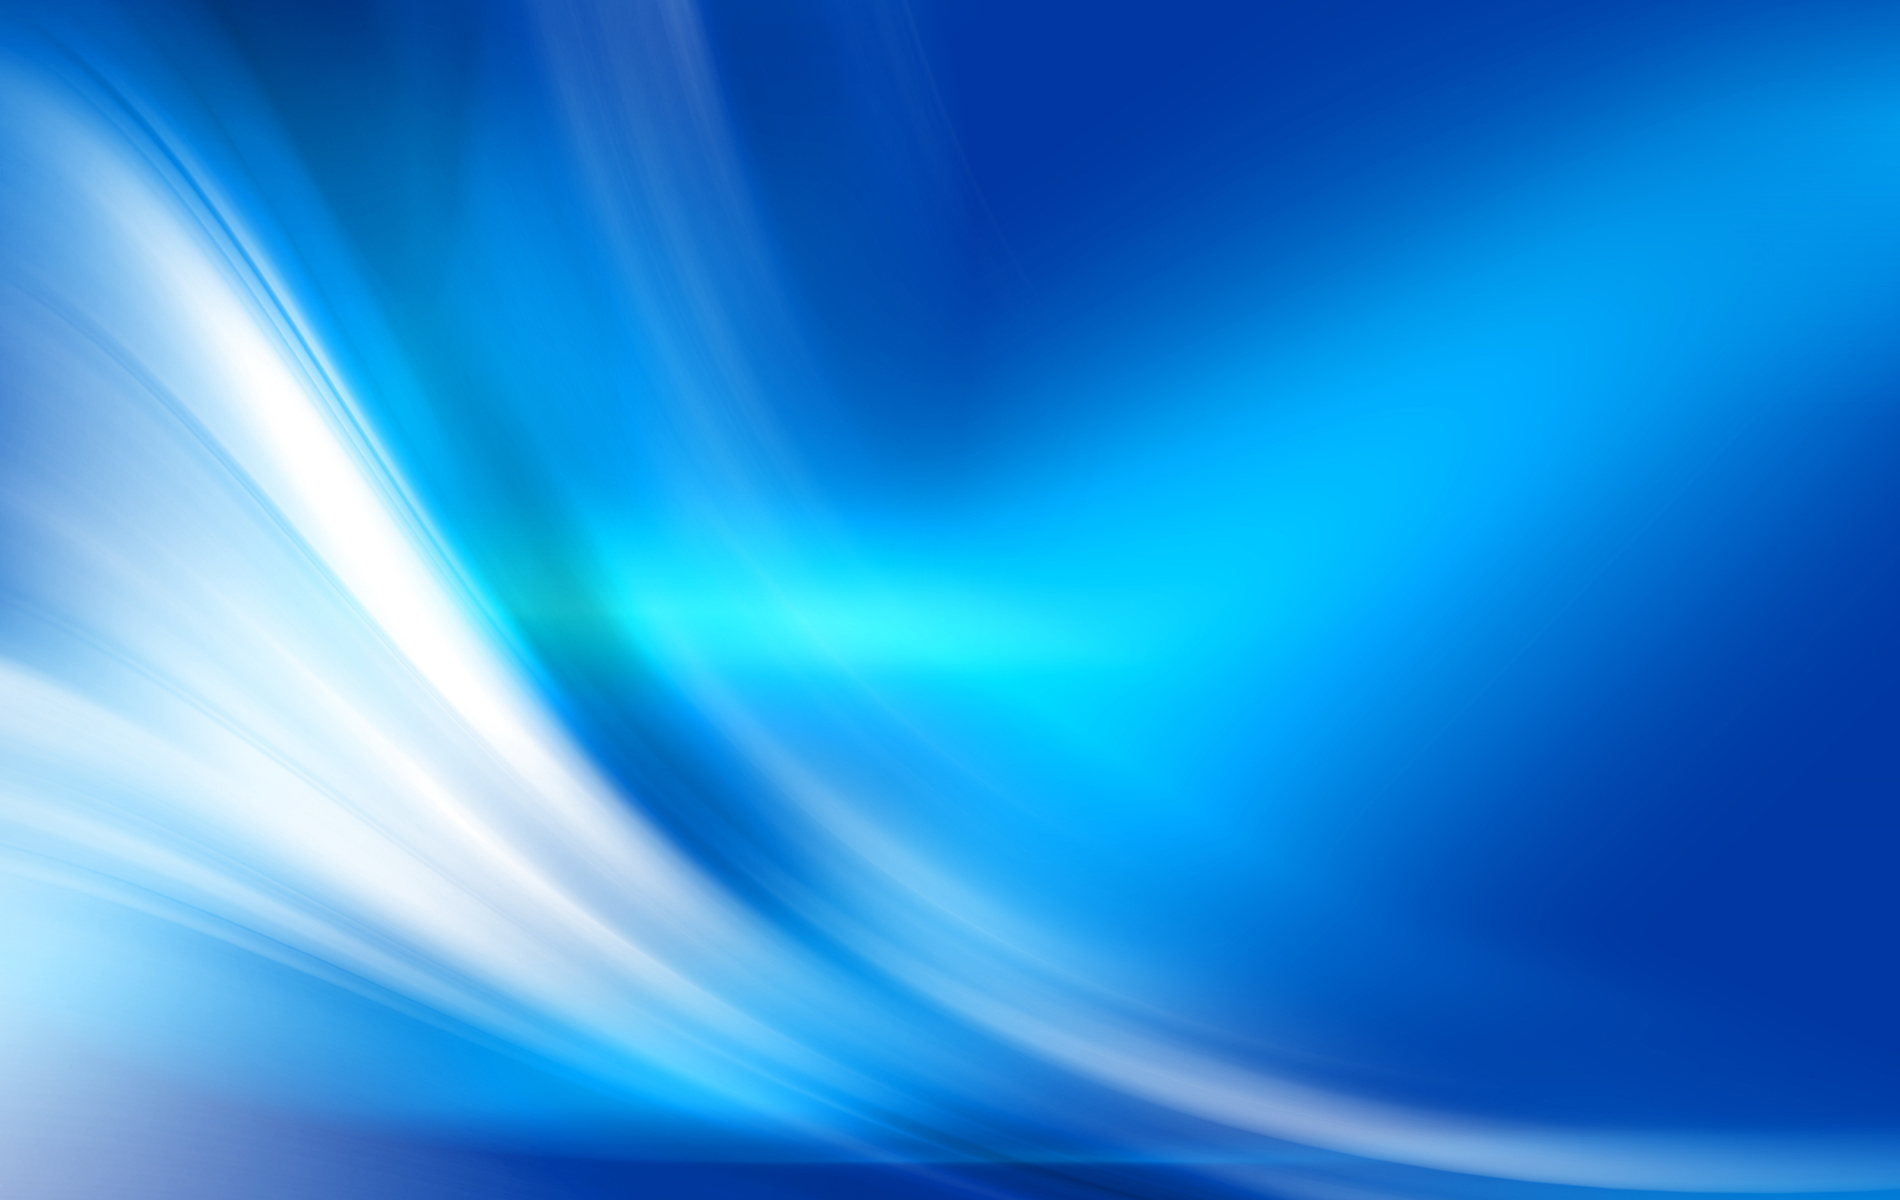 Windows Desktop Background In With Blue Wave